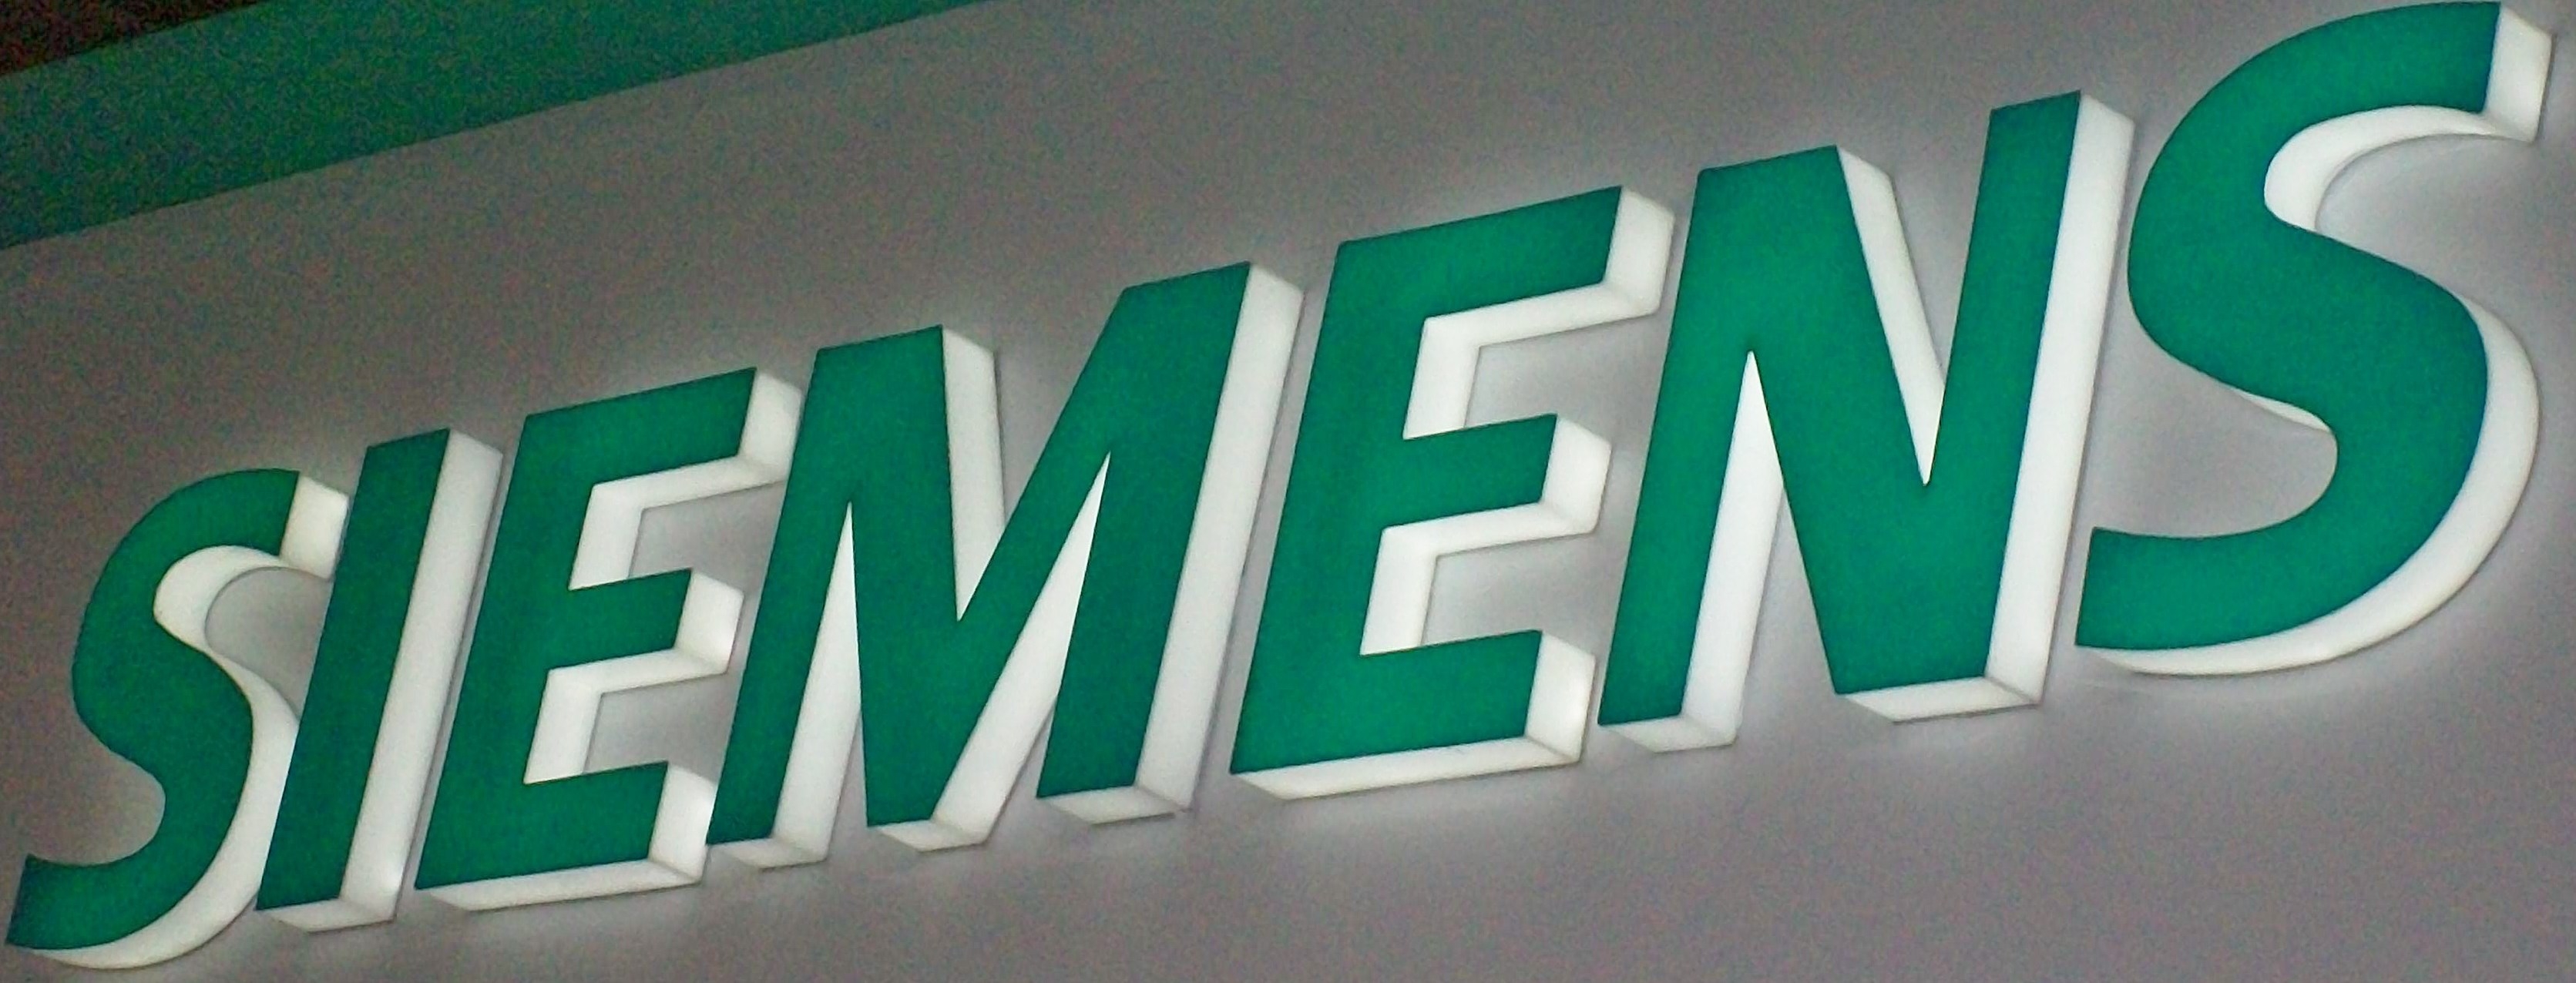 Siemens brand